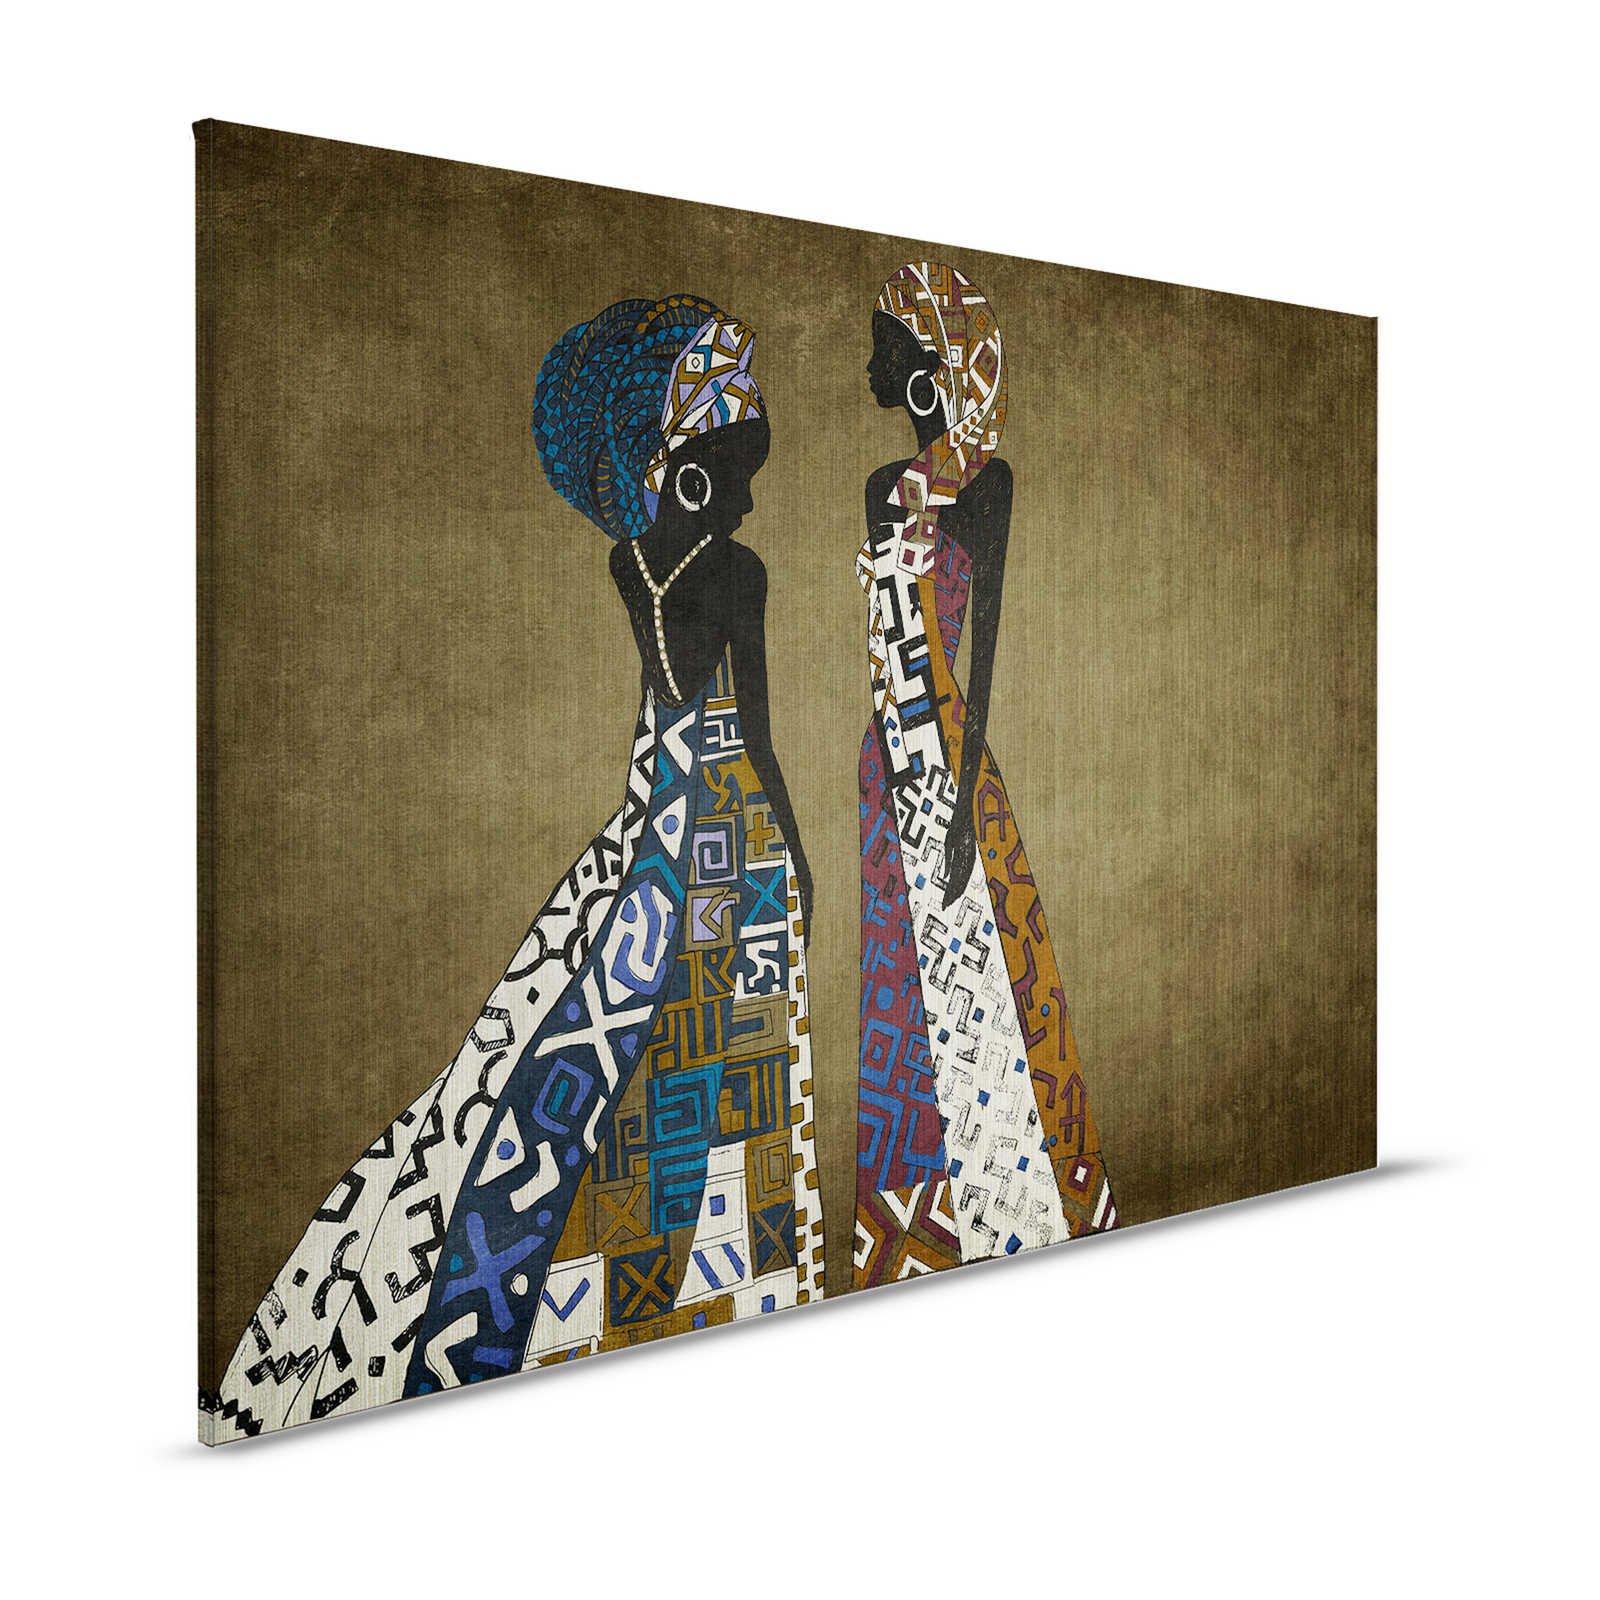 Nairobi 3 - Africa Quadro su tela con disegni etnici - 1,20 m x 0,80 m
